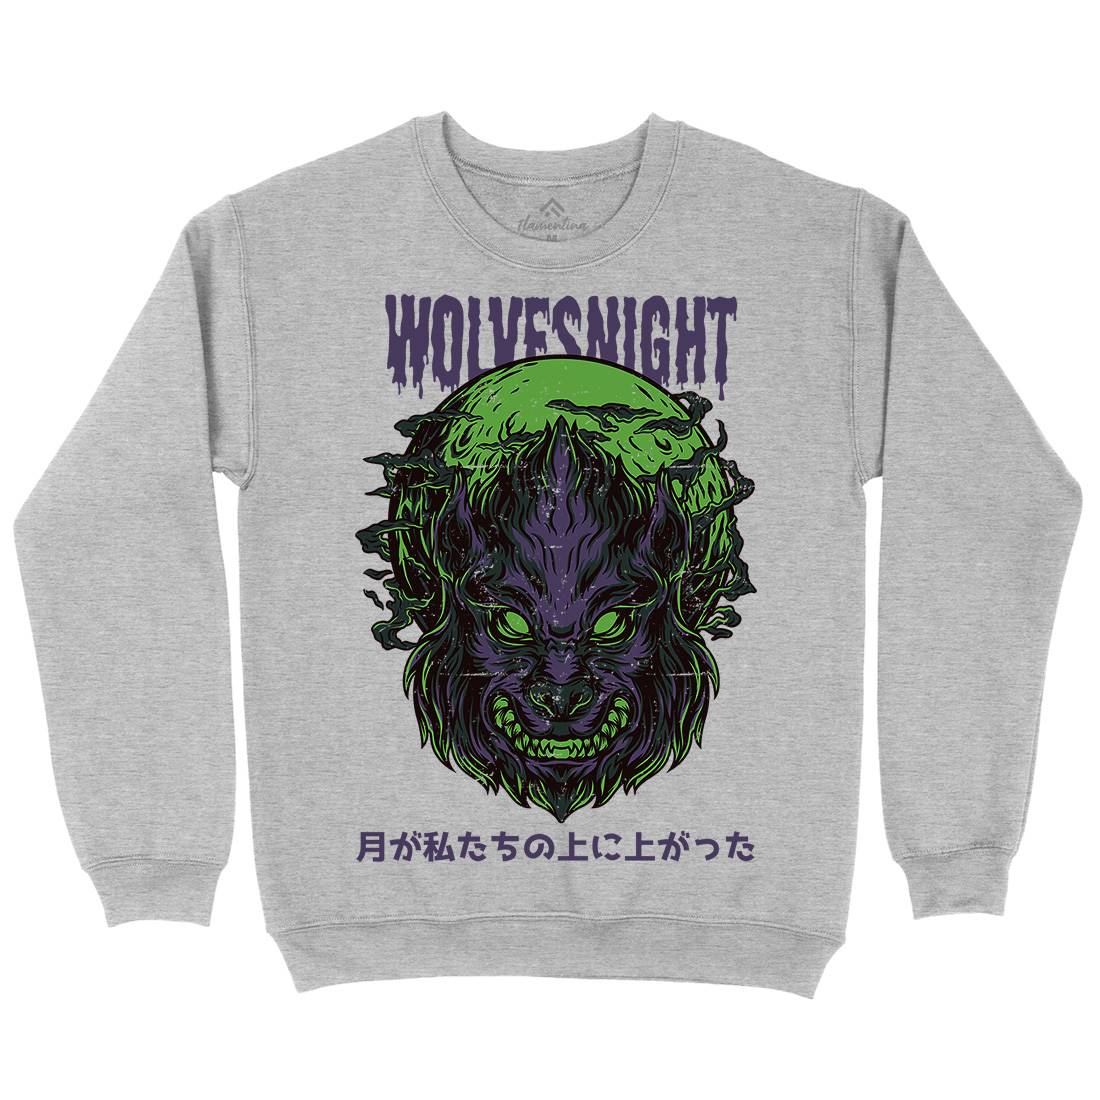 Wolves Night Kids Crew Neck Sweatshirt Horror D888